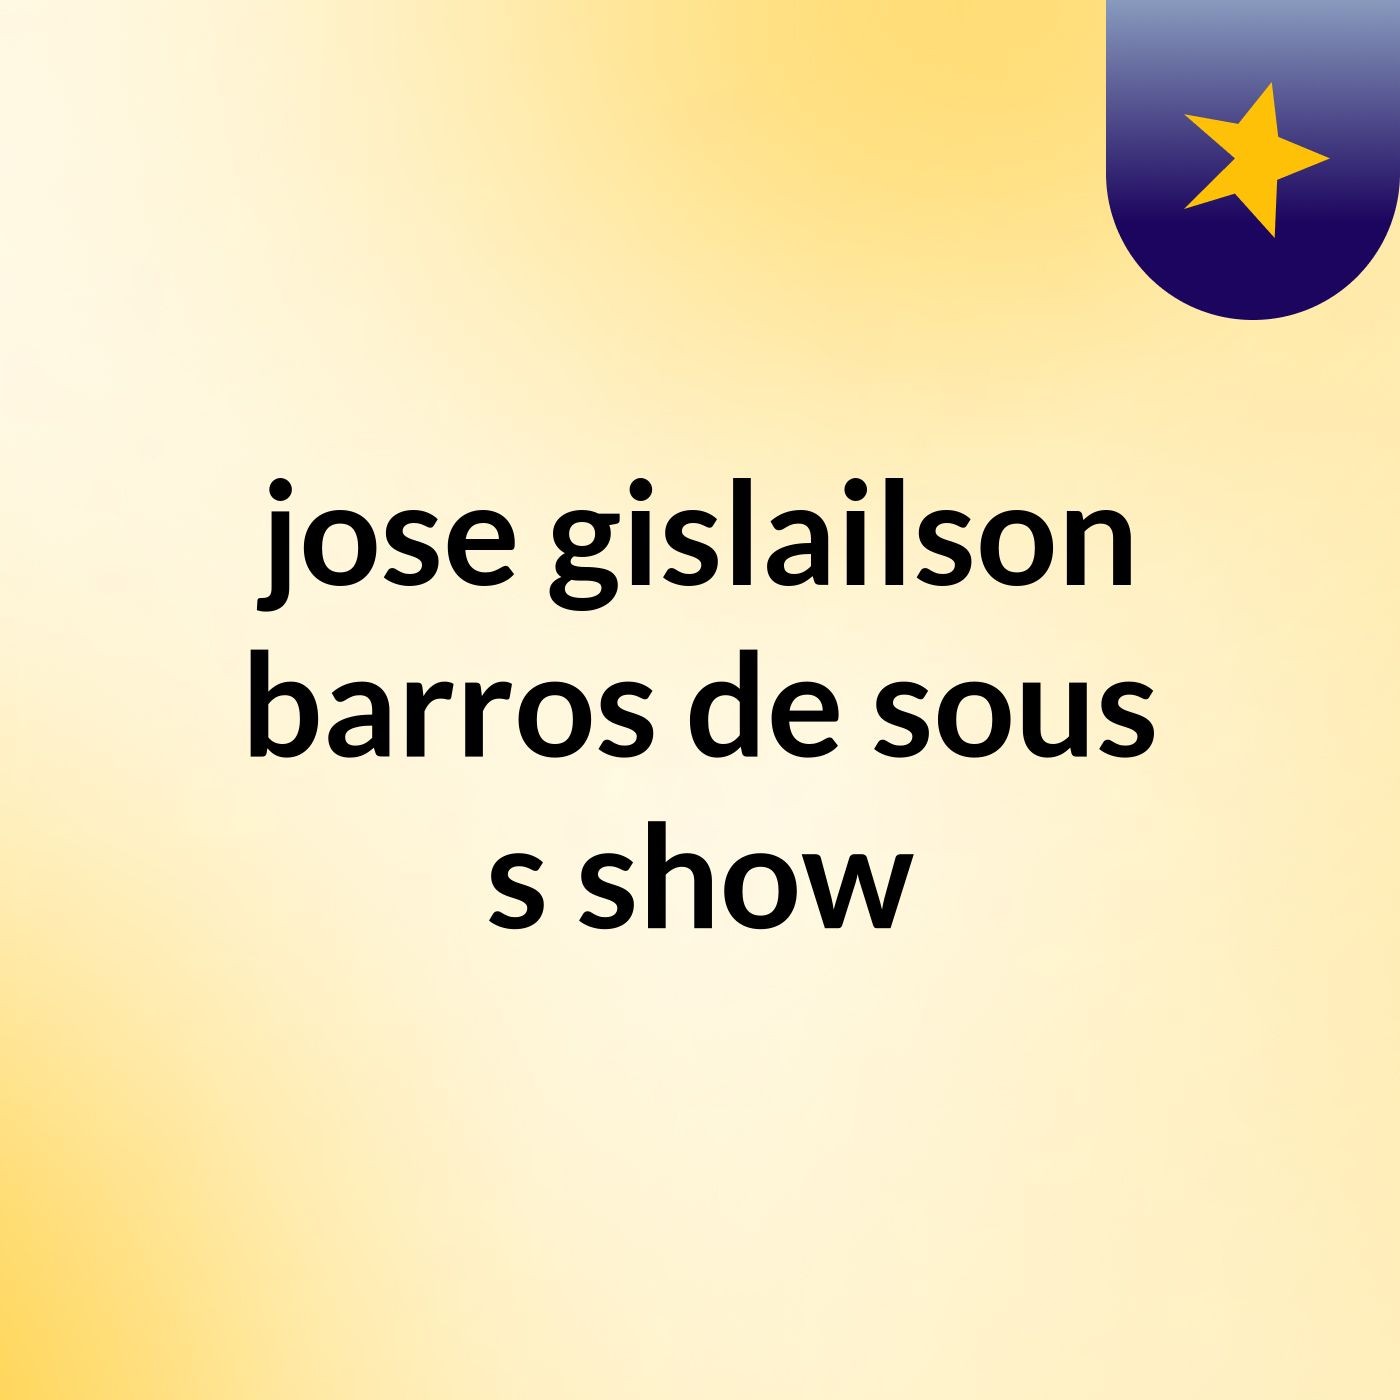 jose gislailson barros de sous's show